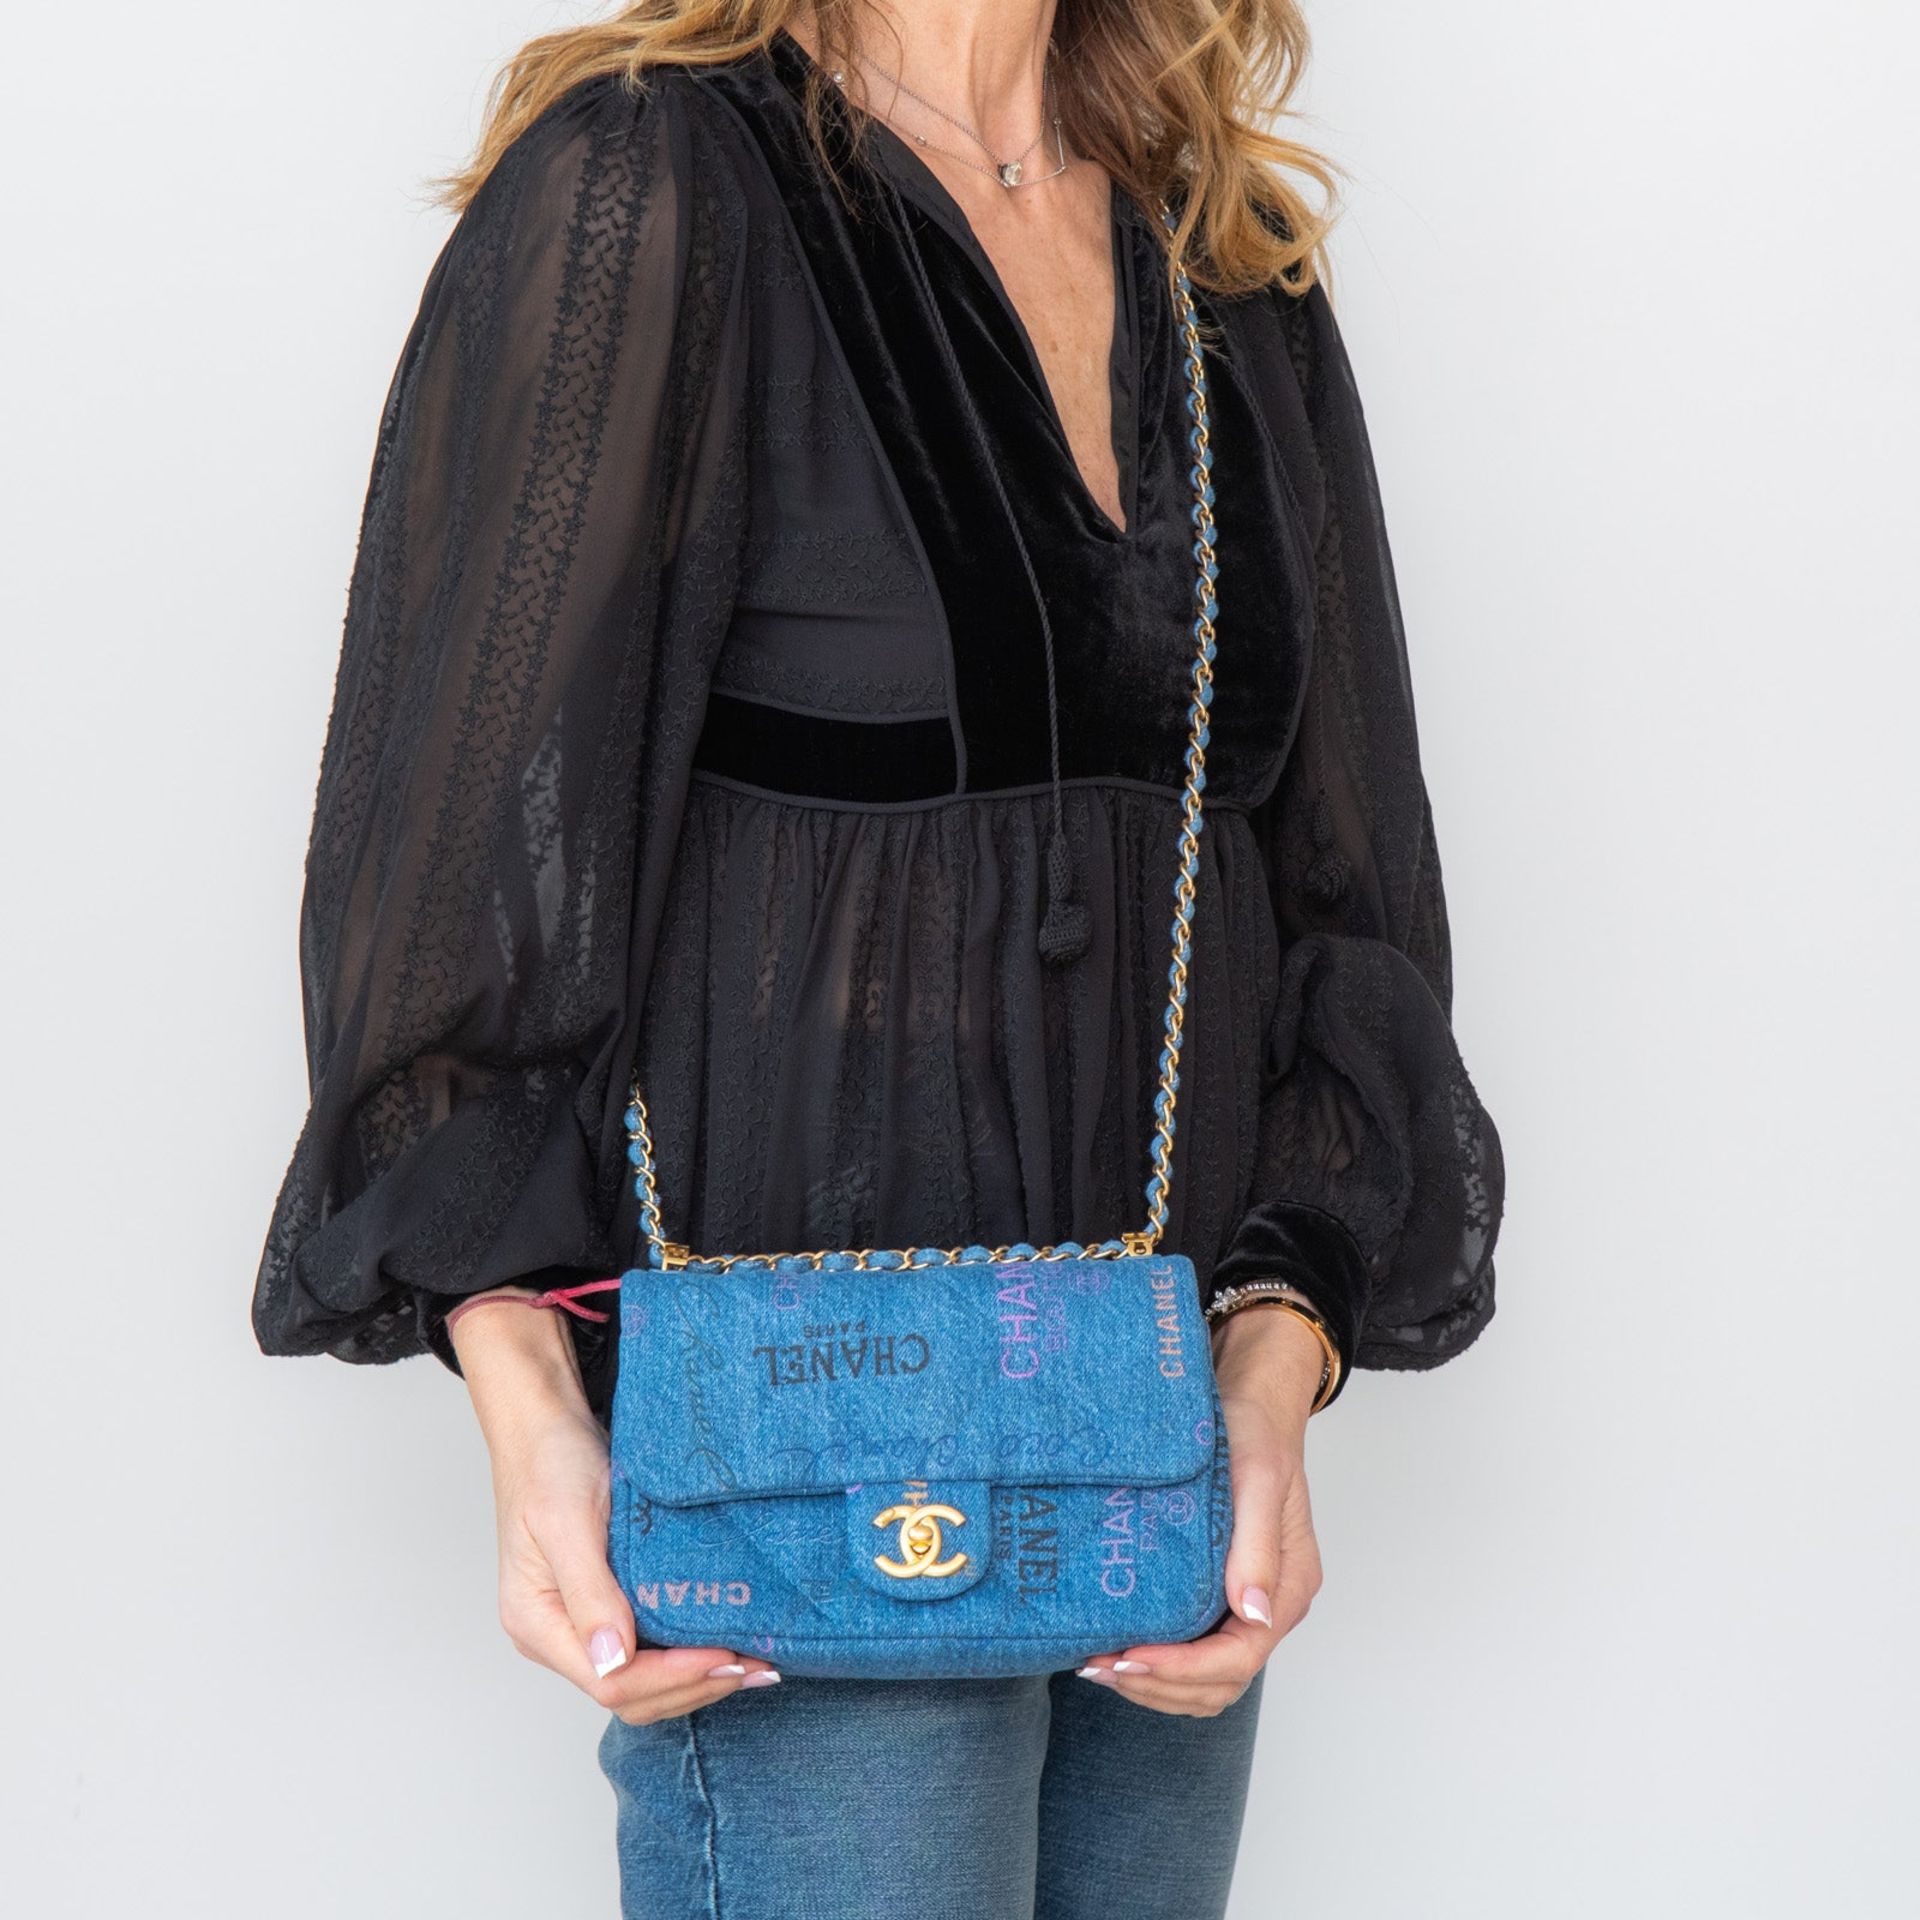 Chanel Blue Denim Small Flap Bag - Image 10 of 15